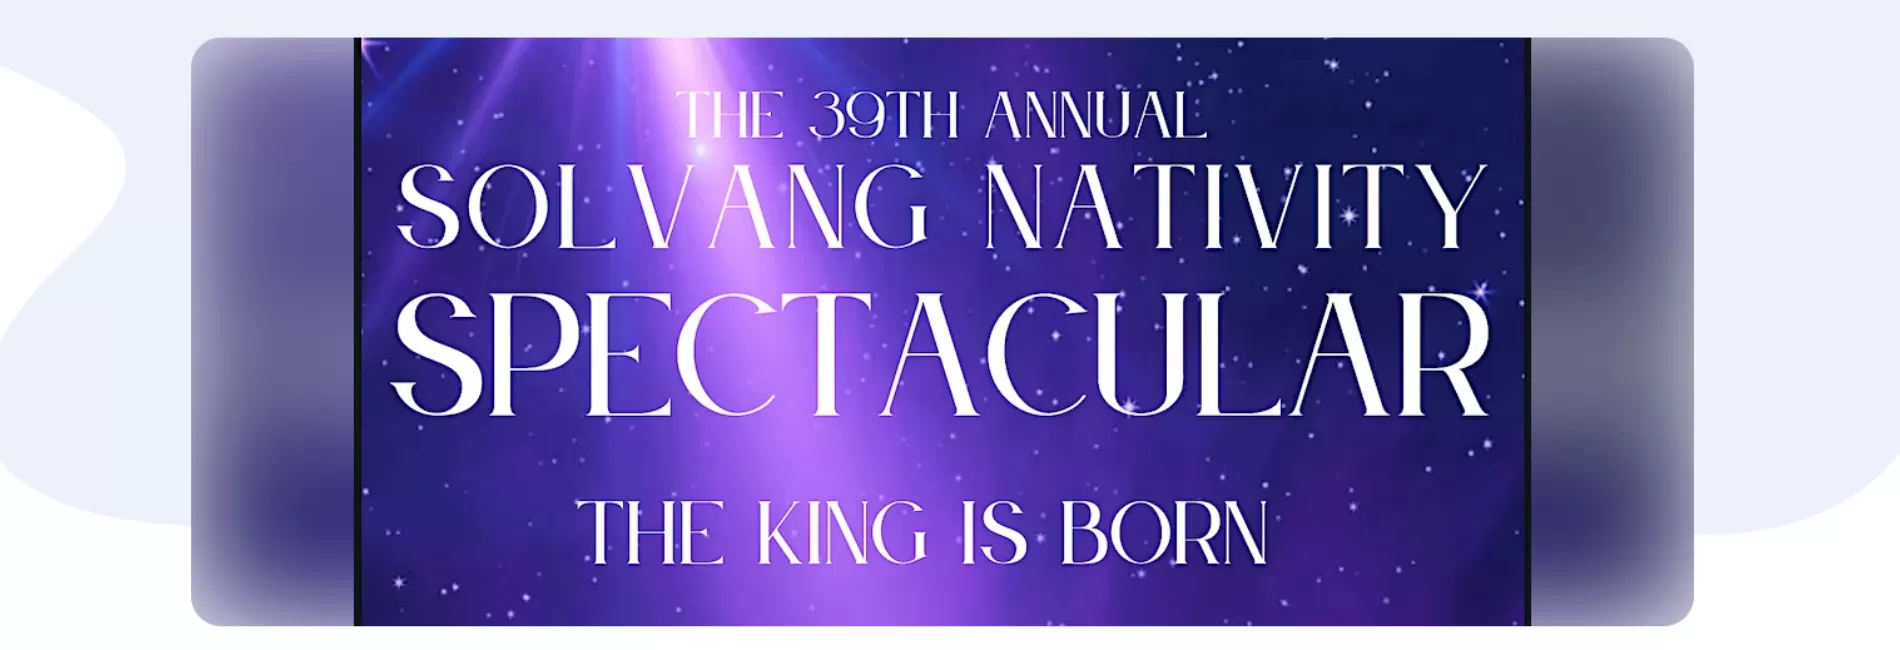 Solvang Nativity Spectacular